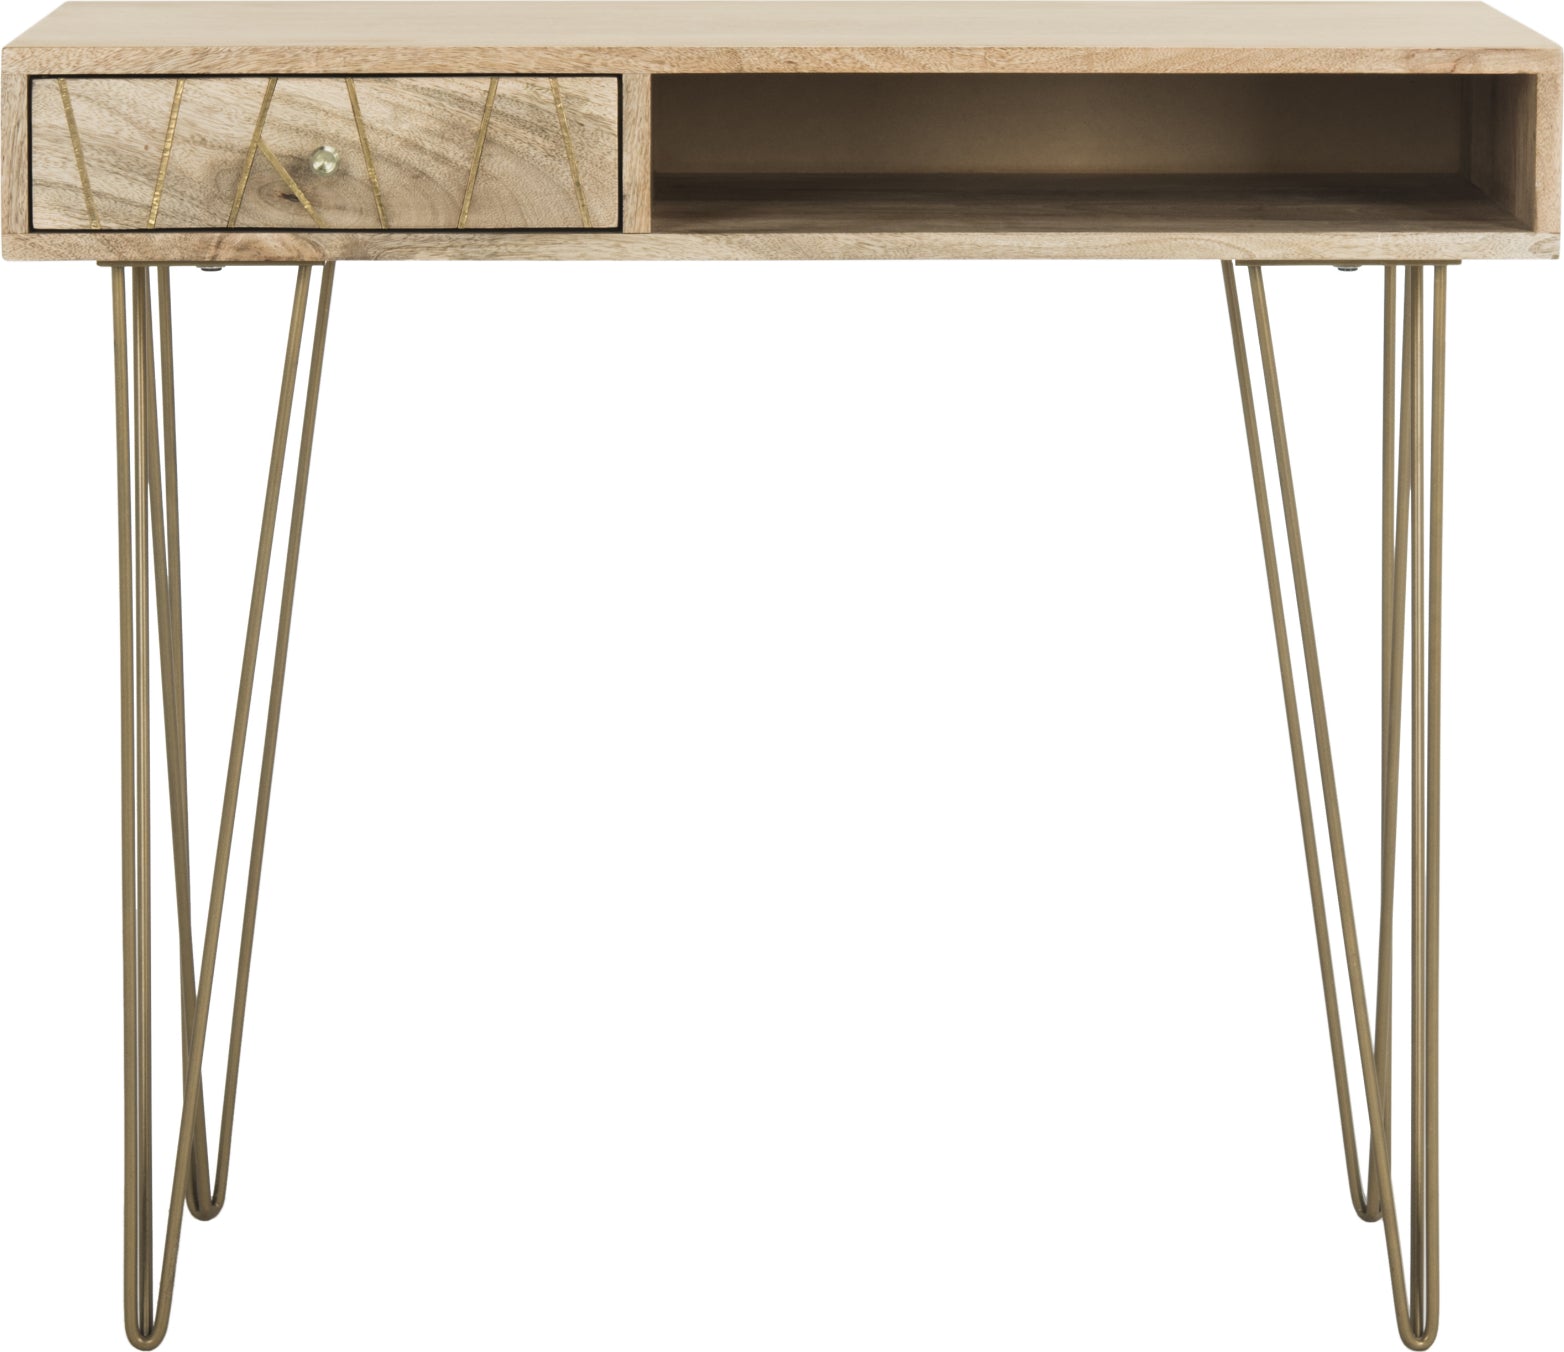 Safavieh Marigold Desk Natural Furniture main image